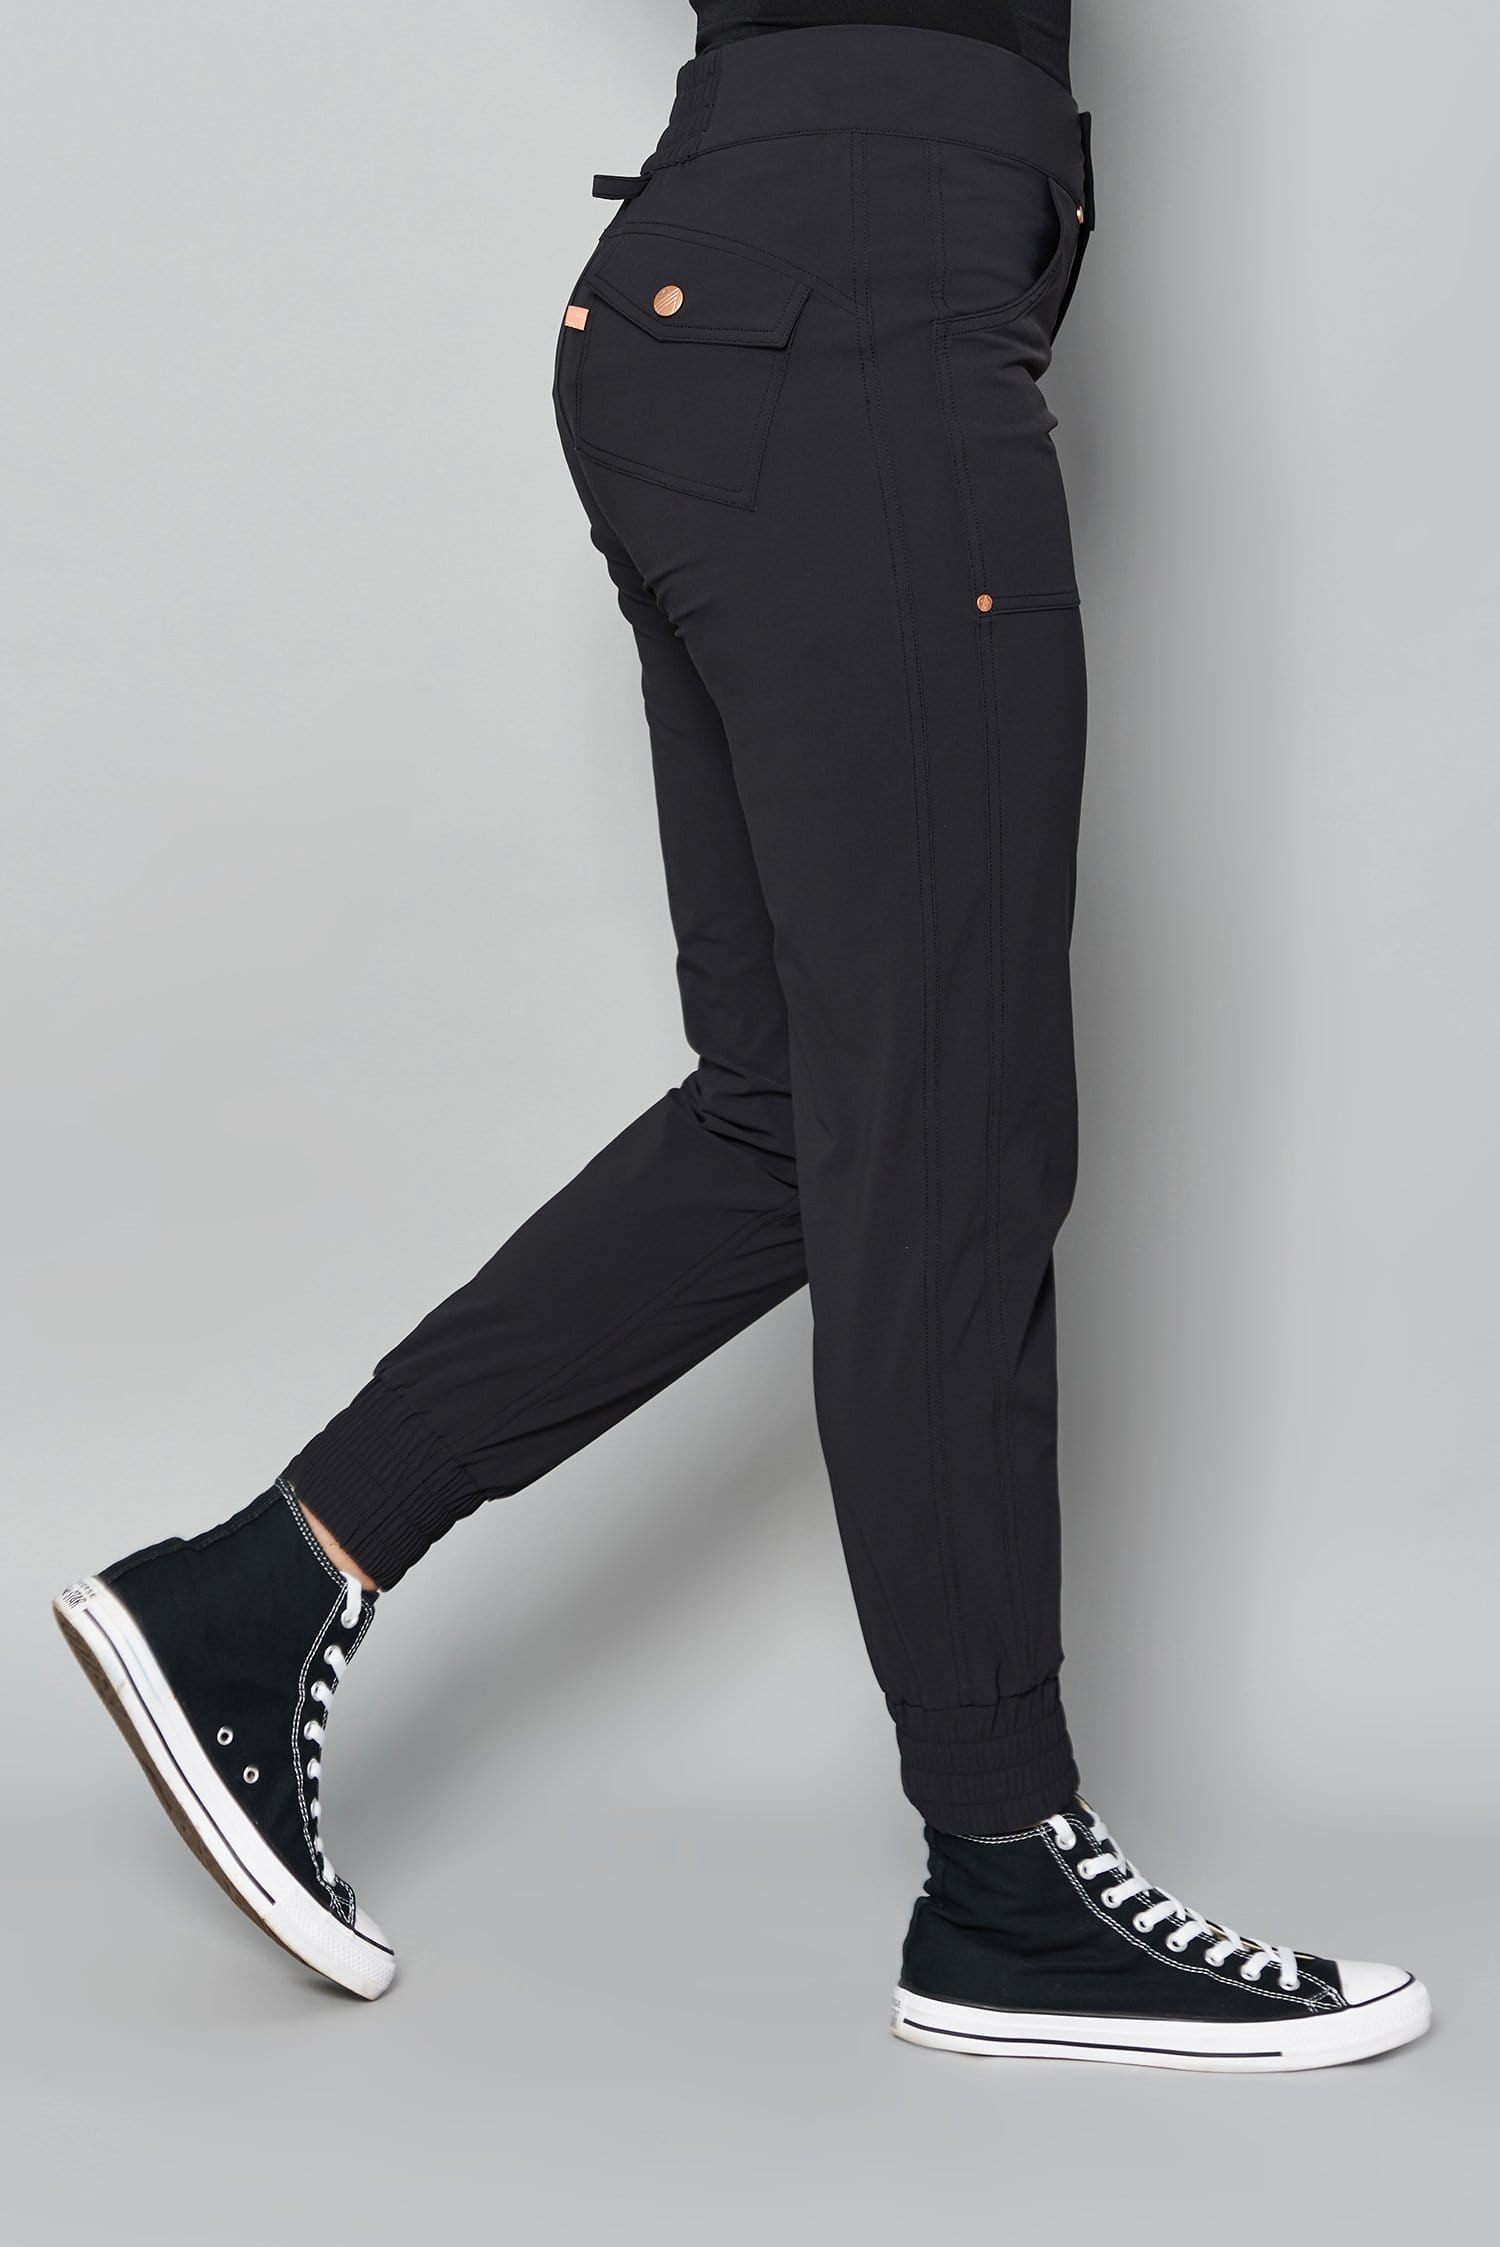 Casual Stroll Pants - Black - 26r / Uk8 - Womens - Acai Outdoorwear